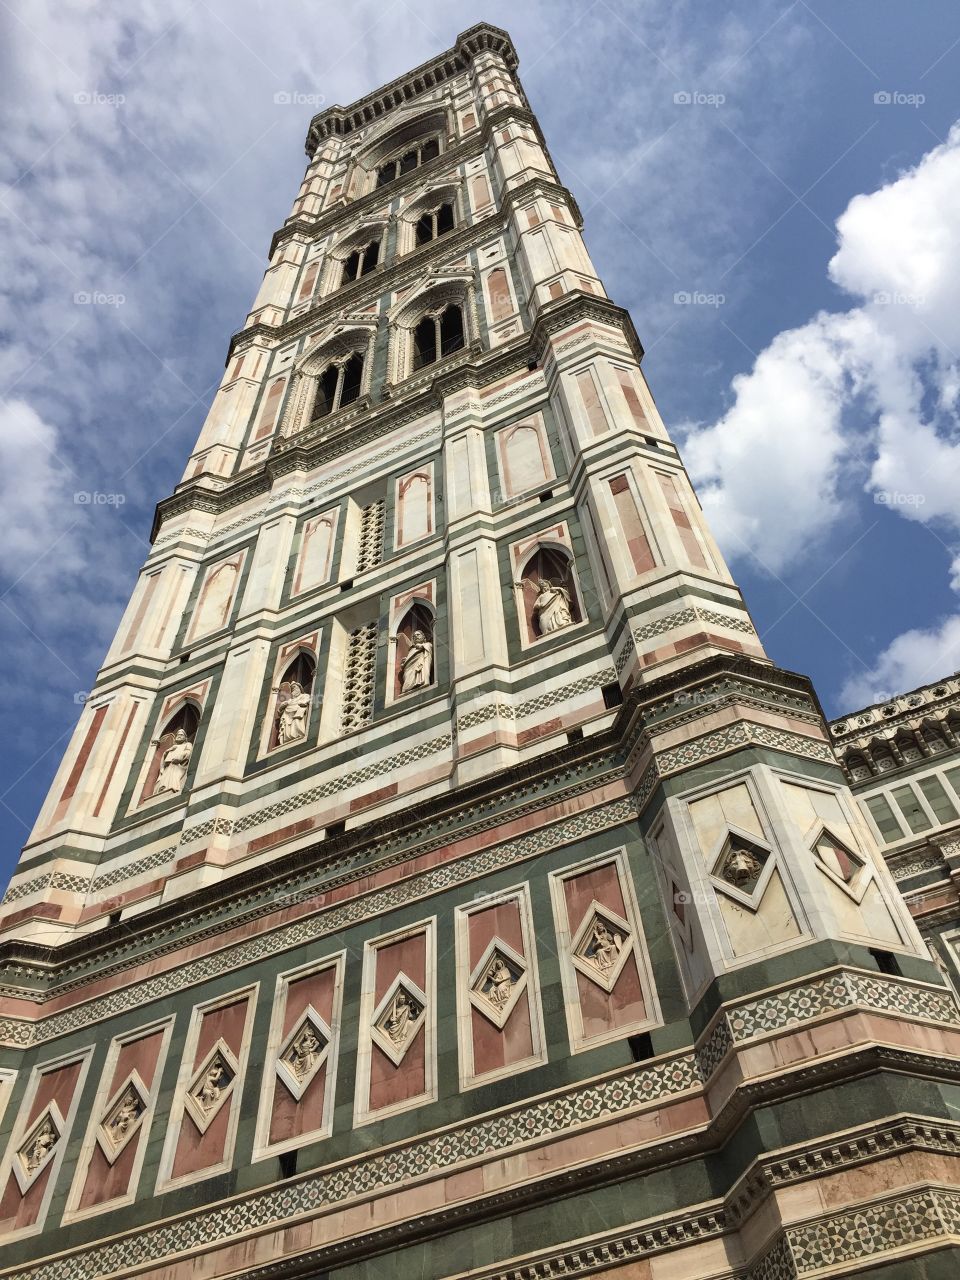 Florence
